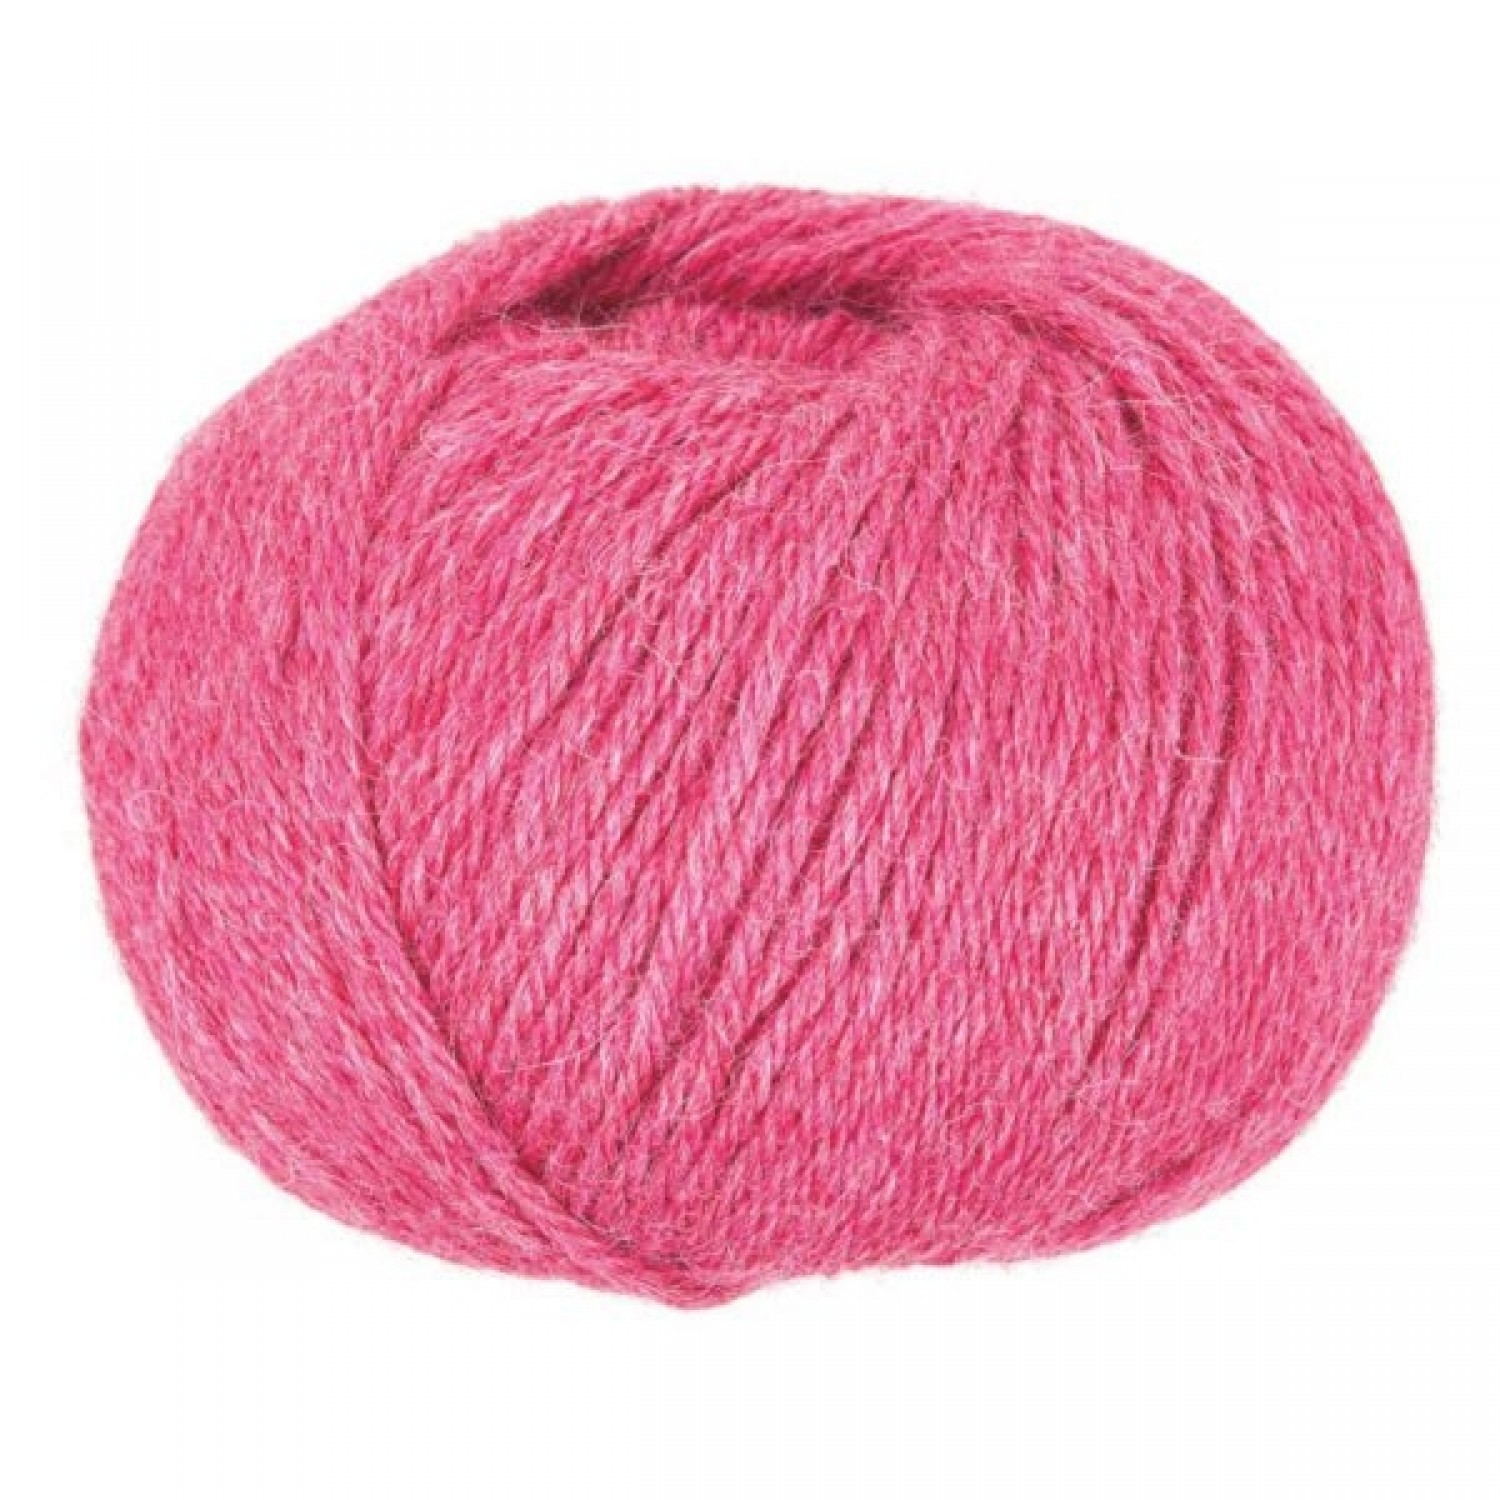 Baby Alpaca-Soft knit crochet yarn, 50g Raspberry-Cream | Apu Kuntur